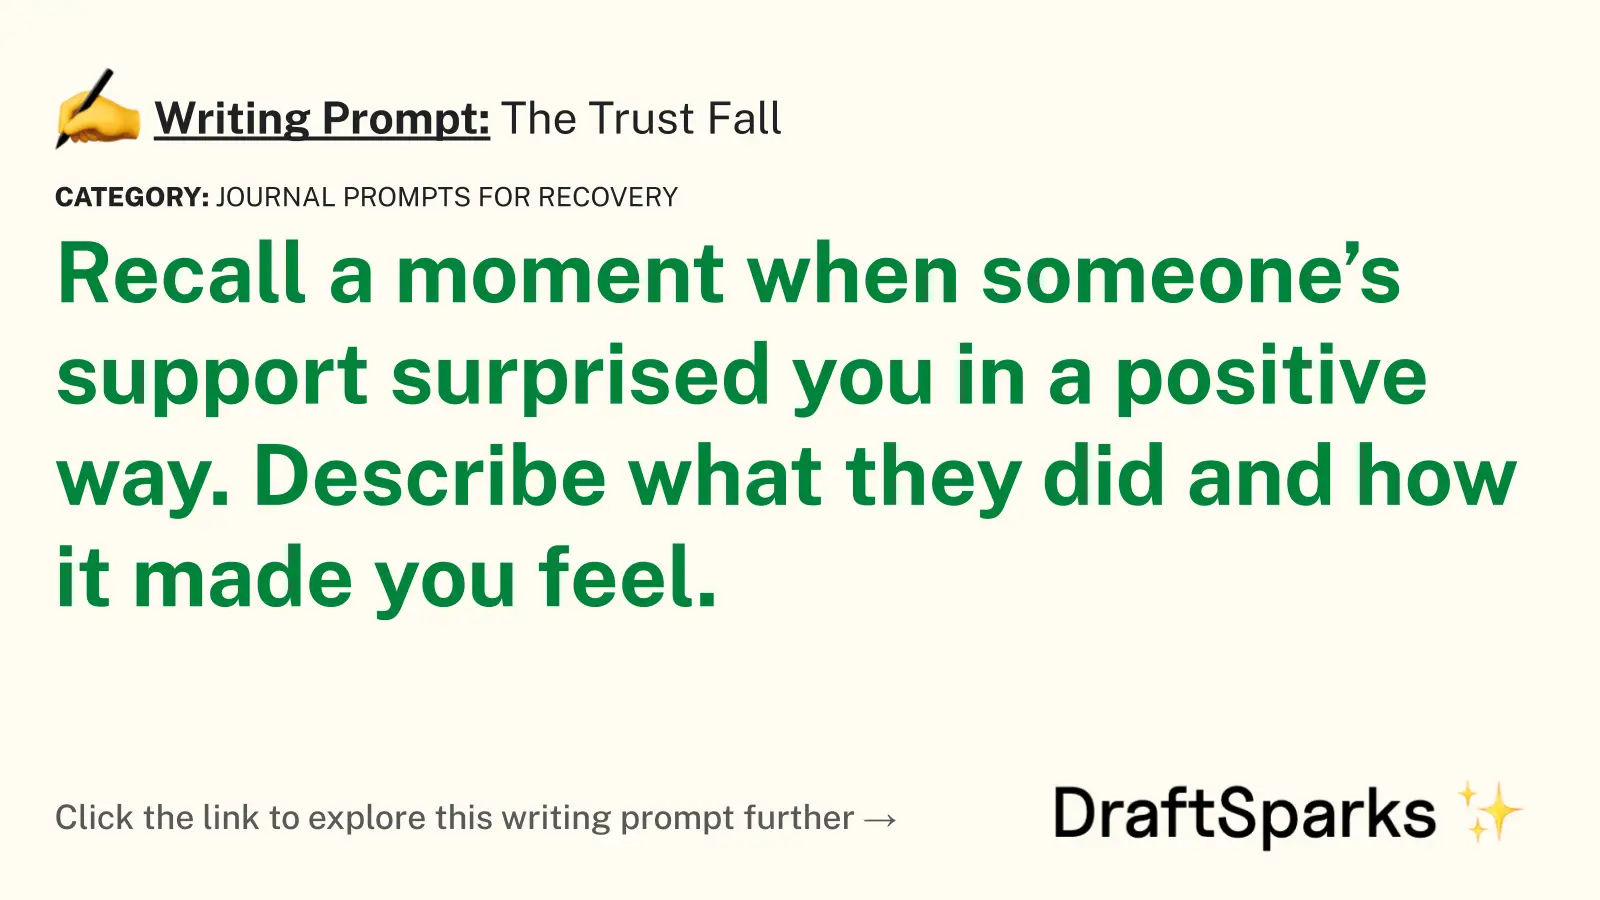 The Trust Fall